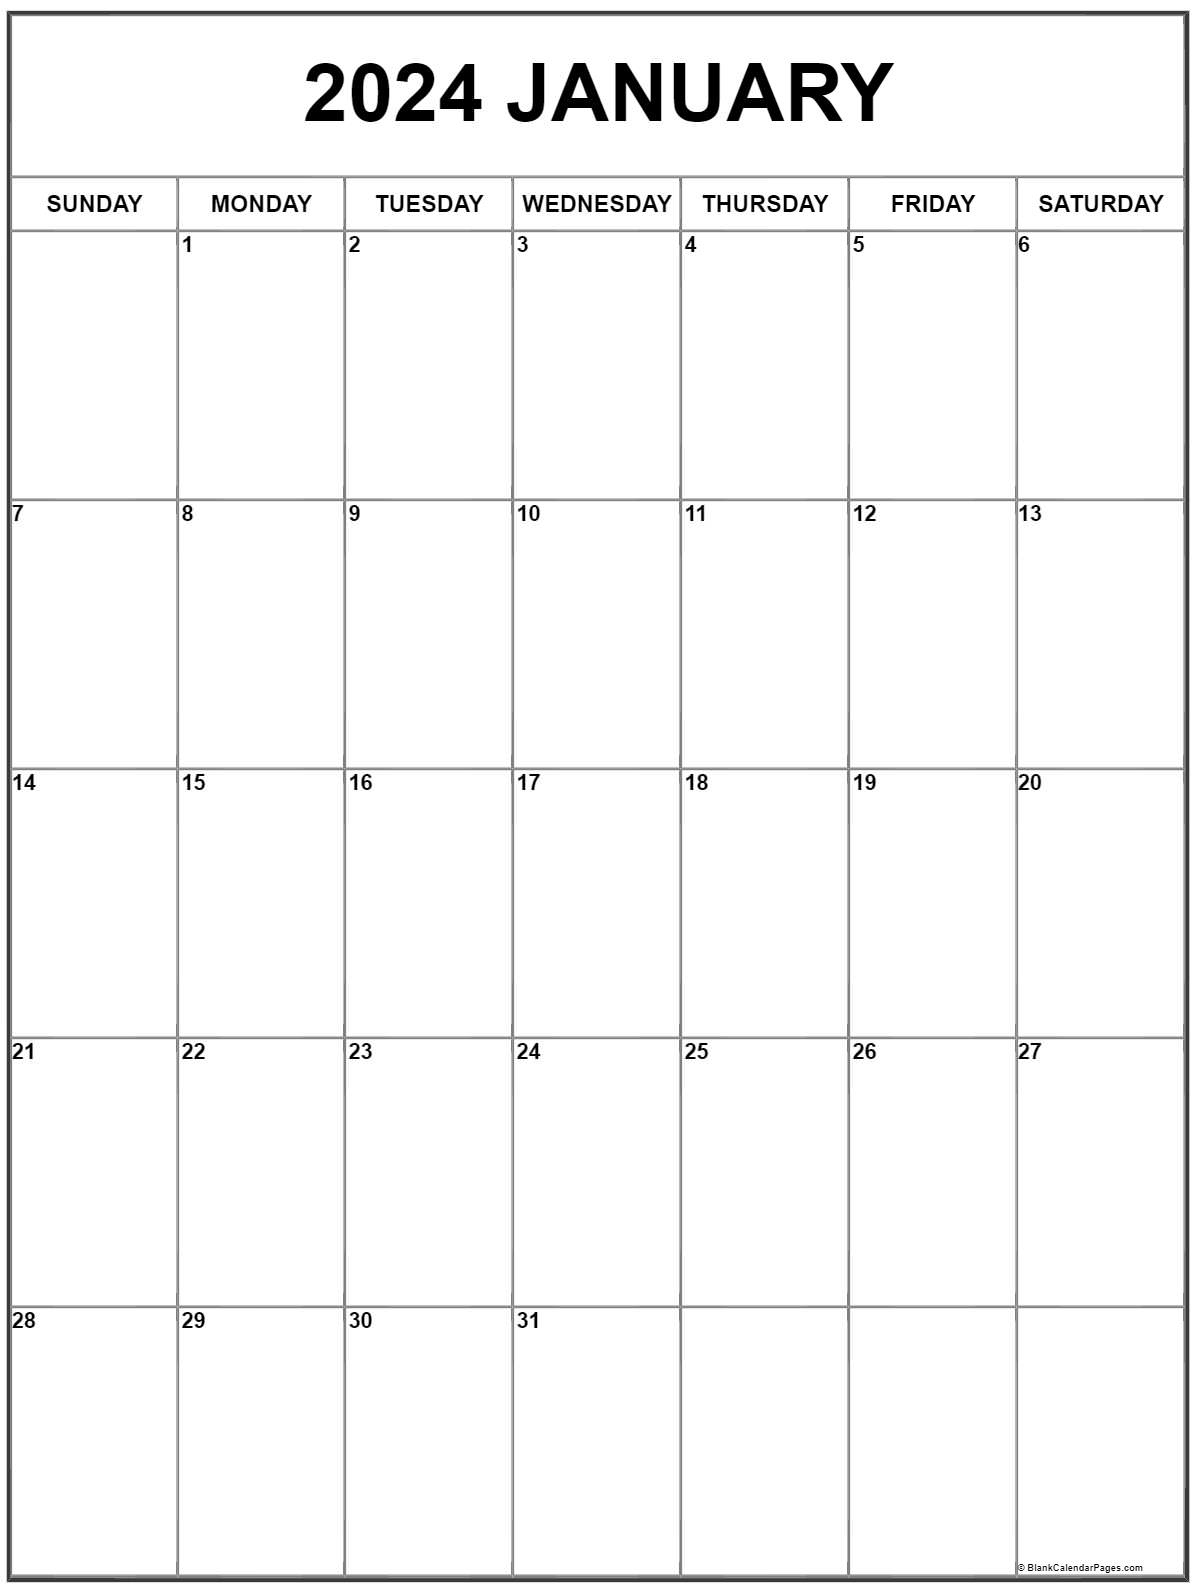 2024 Printable Calendar By Month Vertical Lotti Rhianon - Free Printable 2024 Vertical Calendar